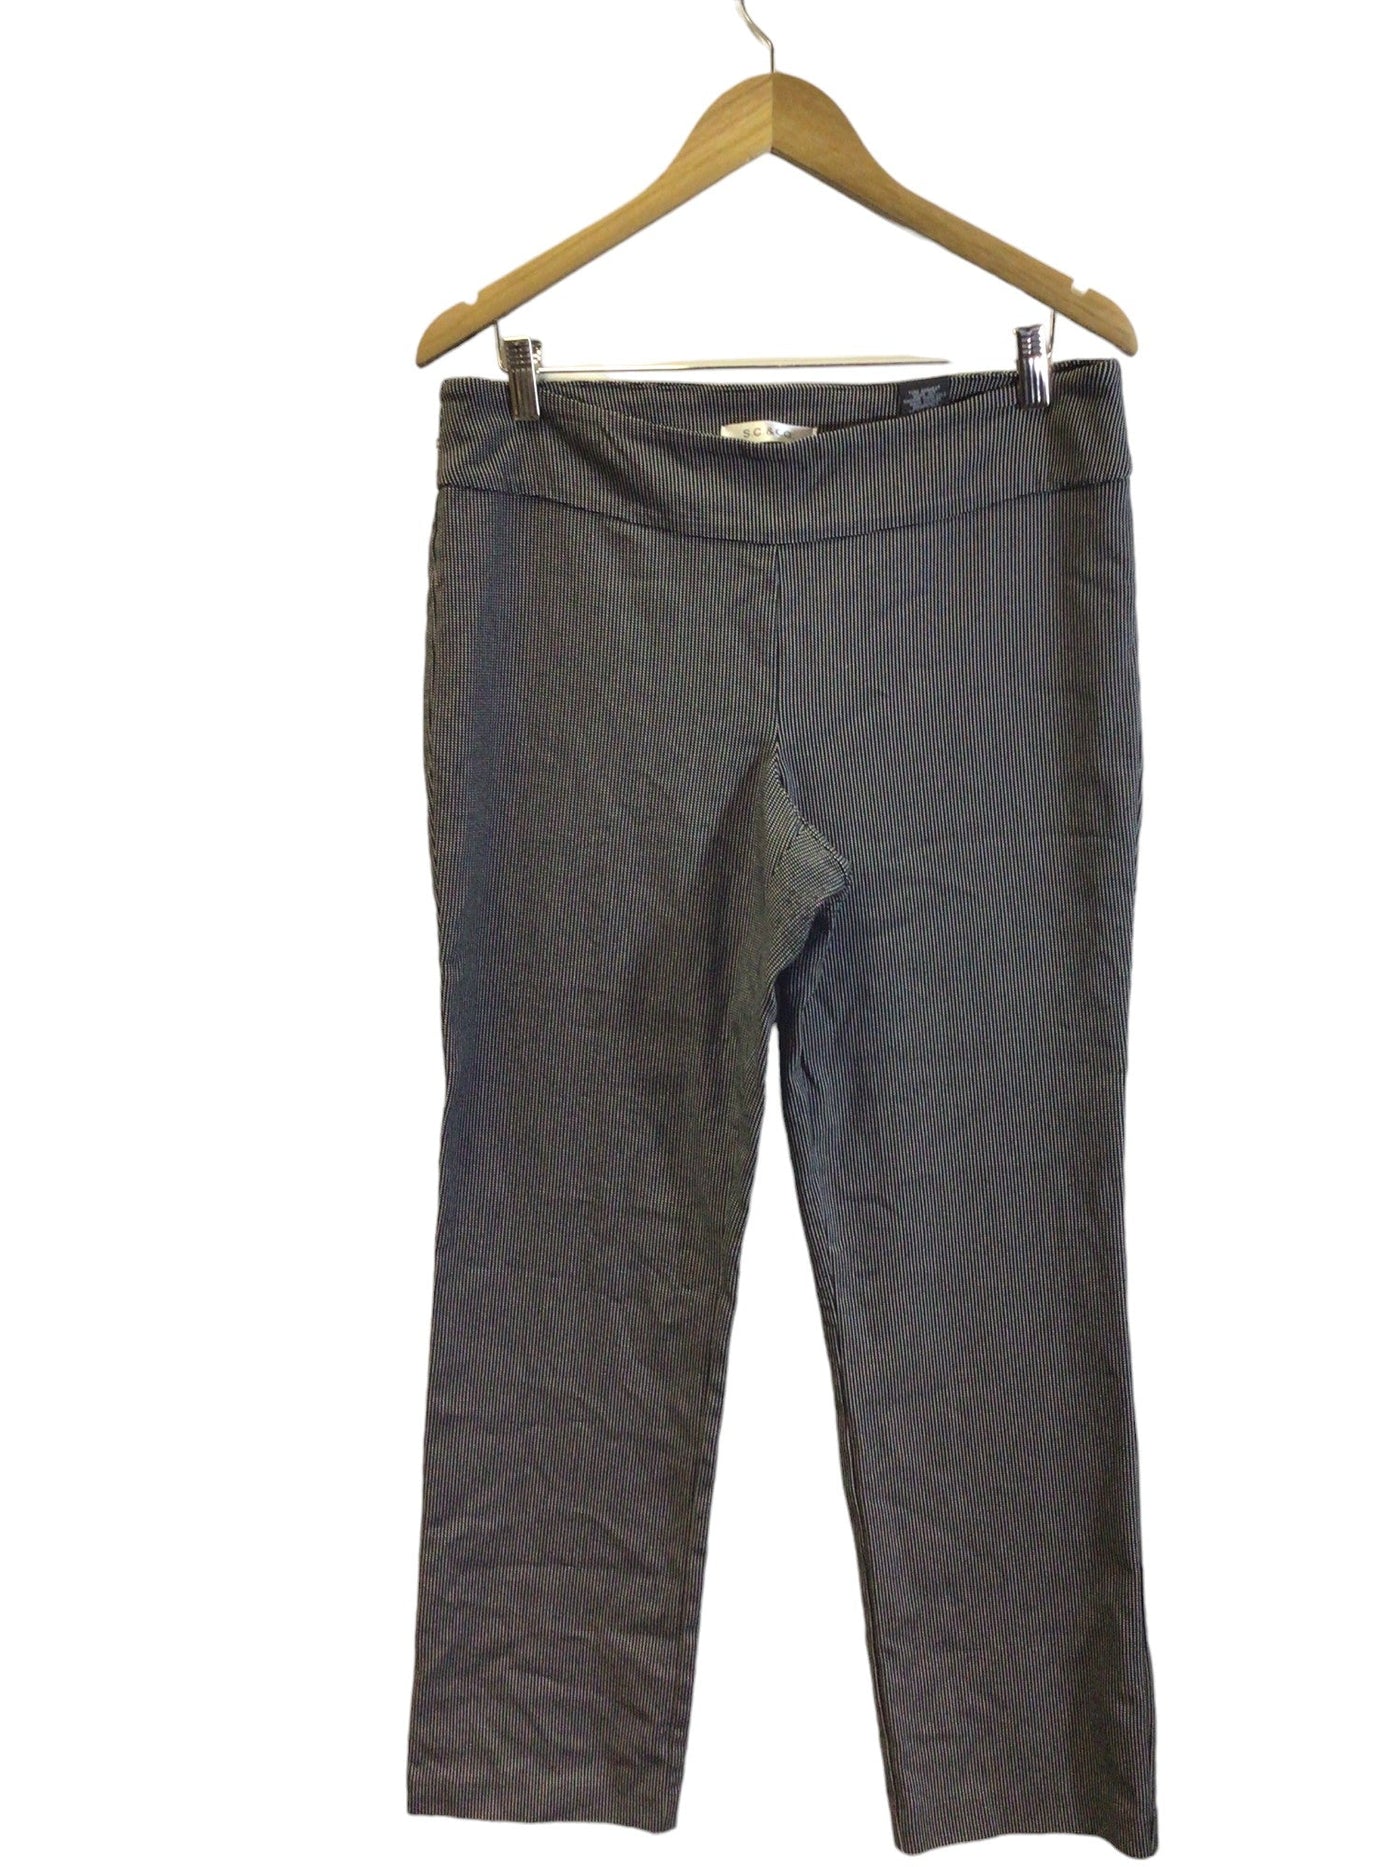 S.C. & CO. Women Work Pants Regular fit in Black - Size 14 | 11.29 $ KOOP